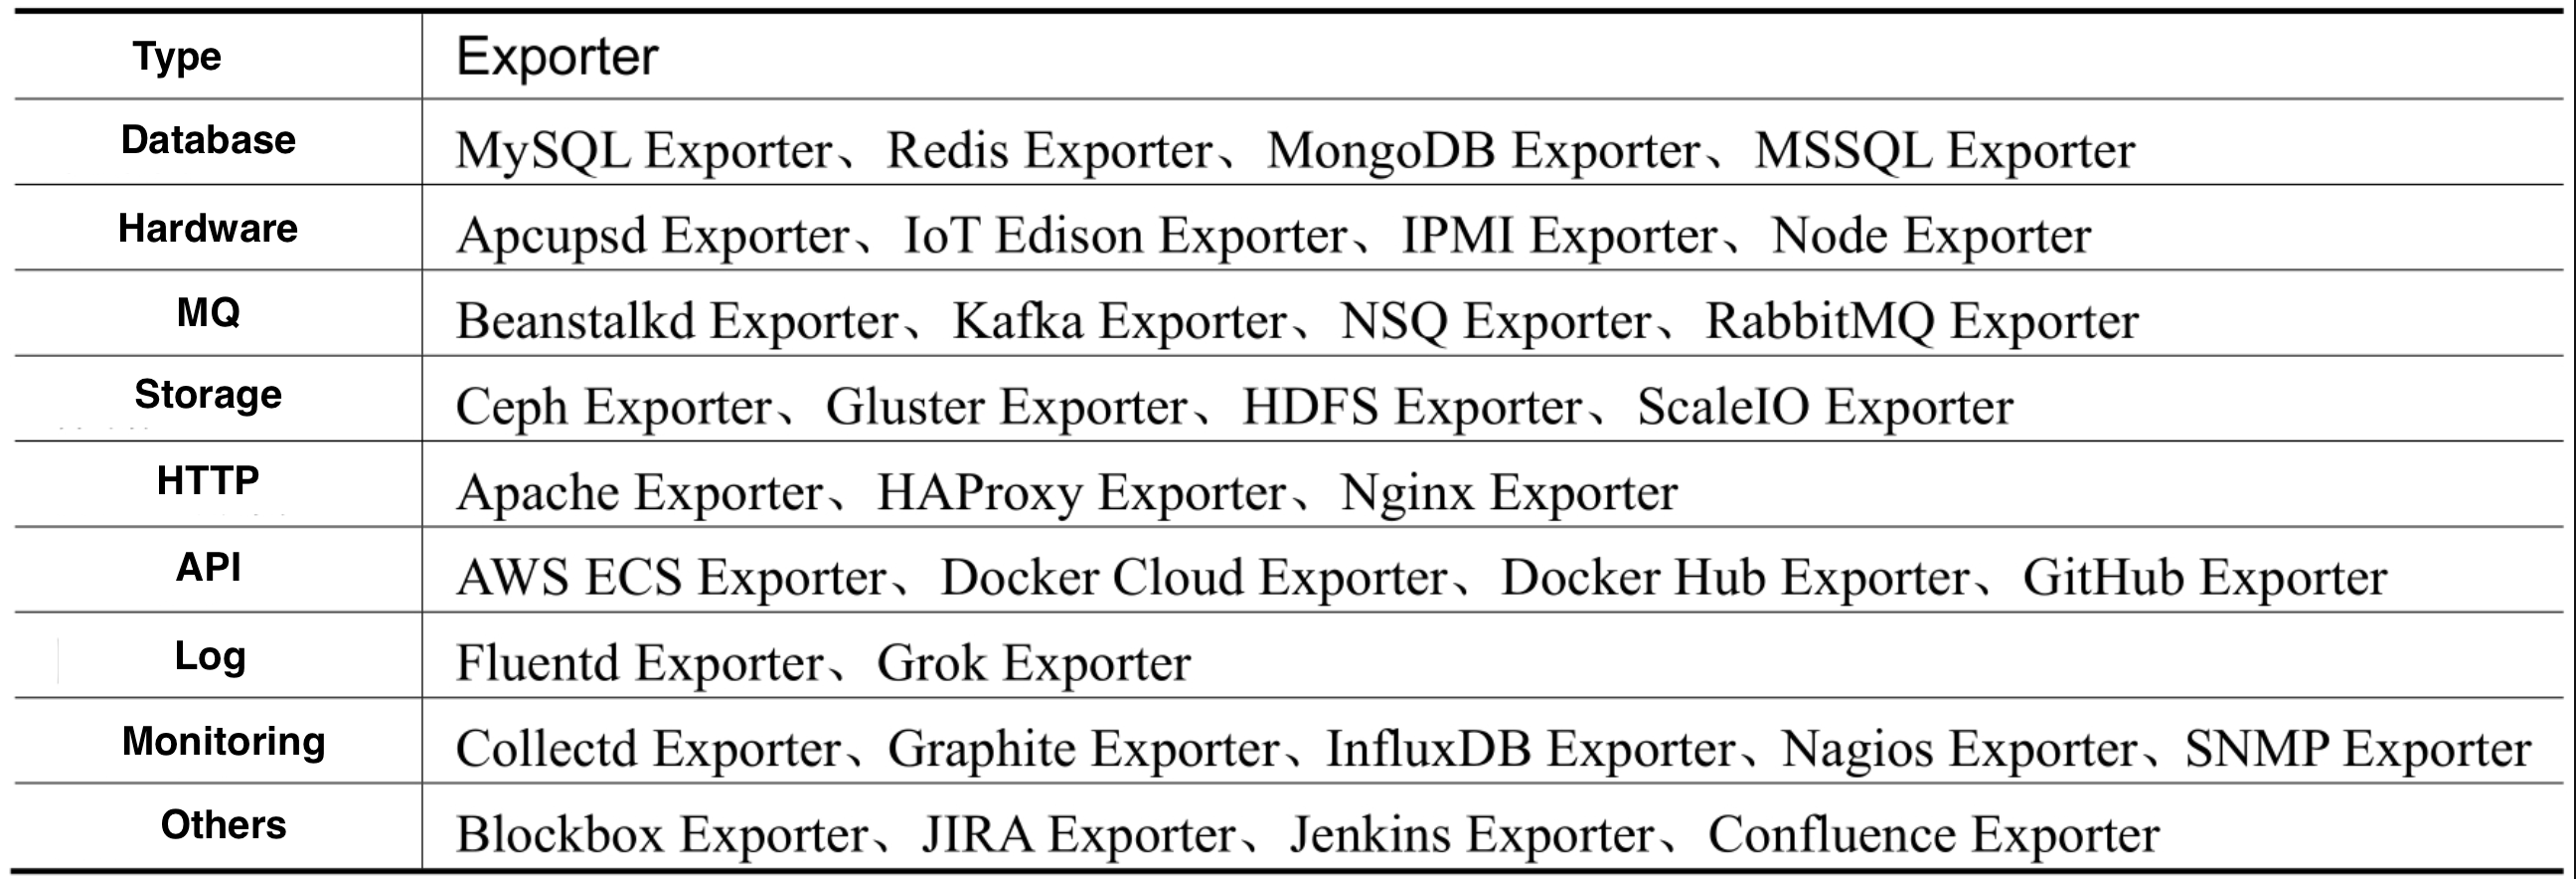 Exporter-Summary